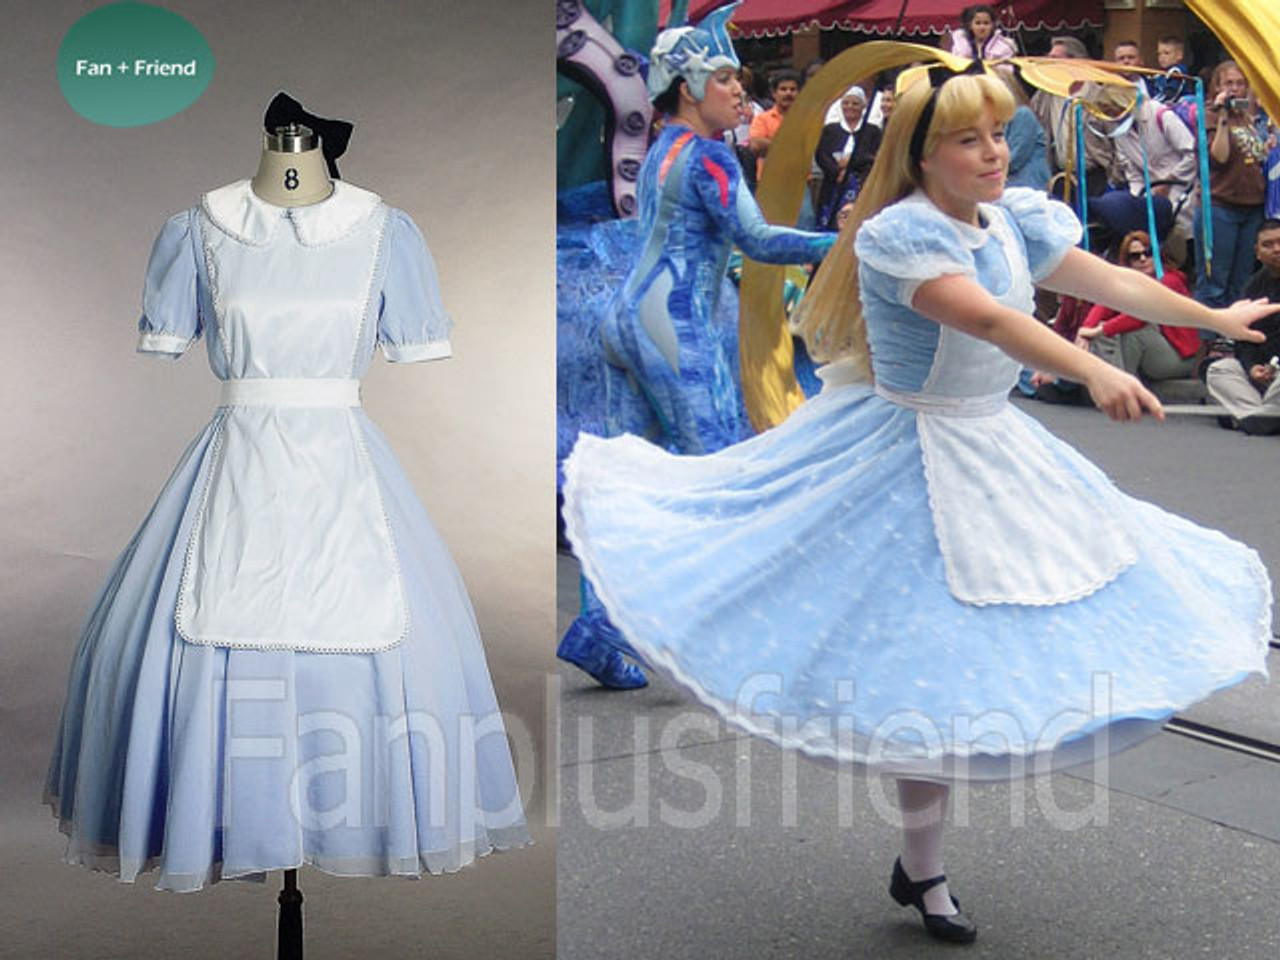 ALICE in Wonderland Dress Alice in Wonderland Custom Costume, Blue